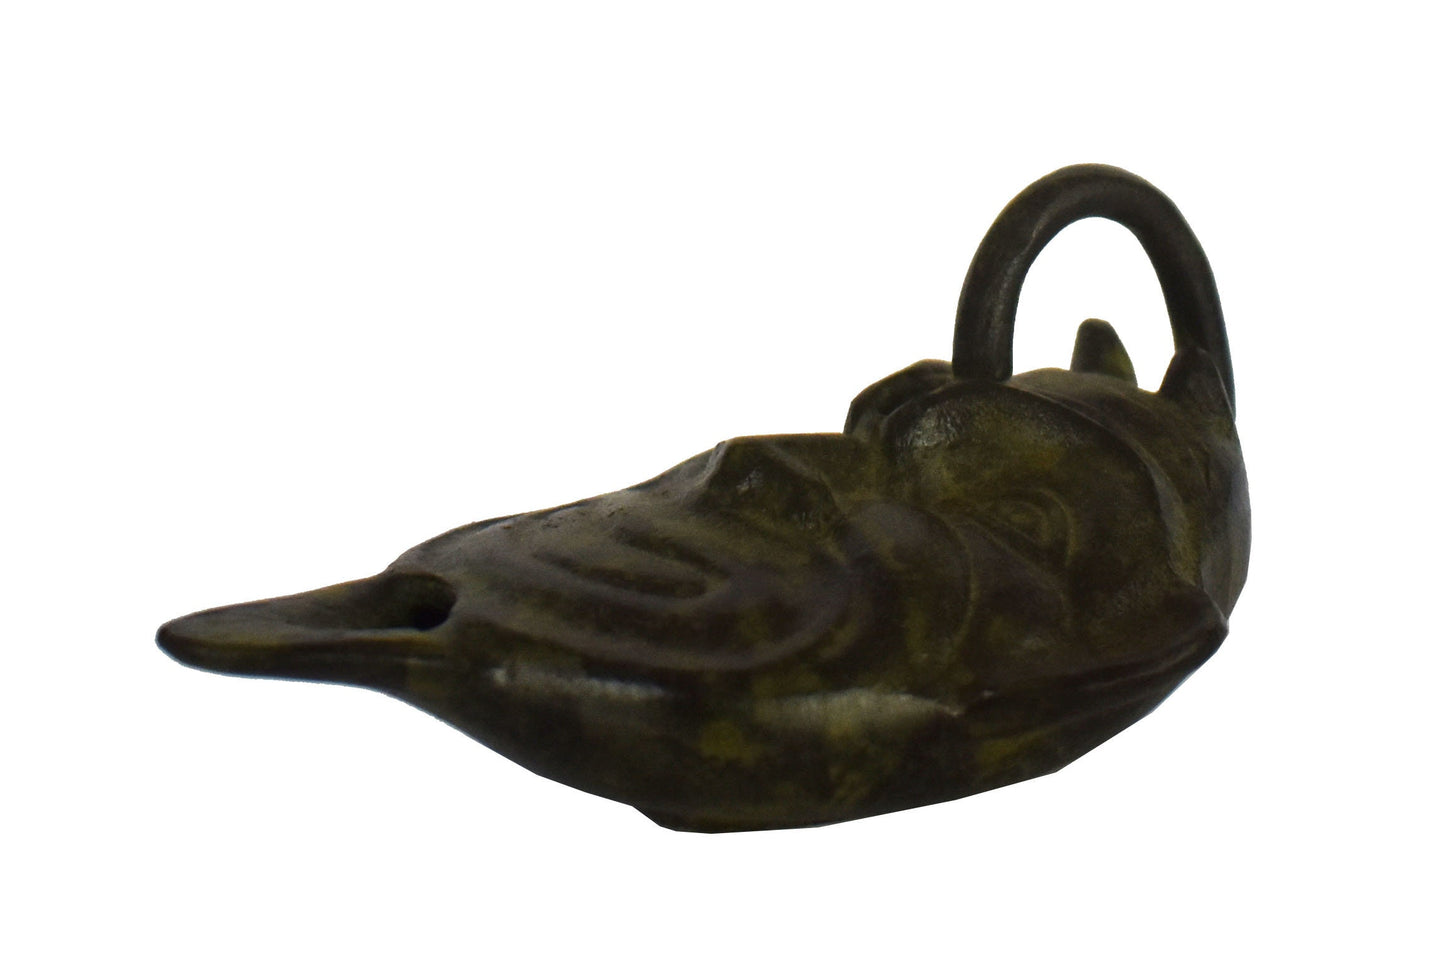 Bronze oil lamp - Satyr face - ancient Greek reproduction artifact